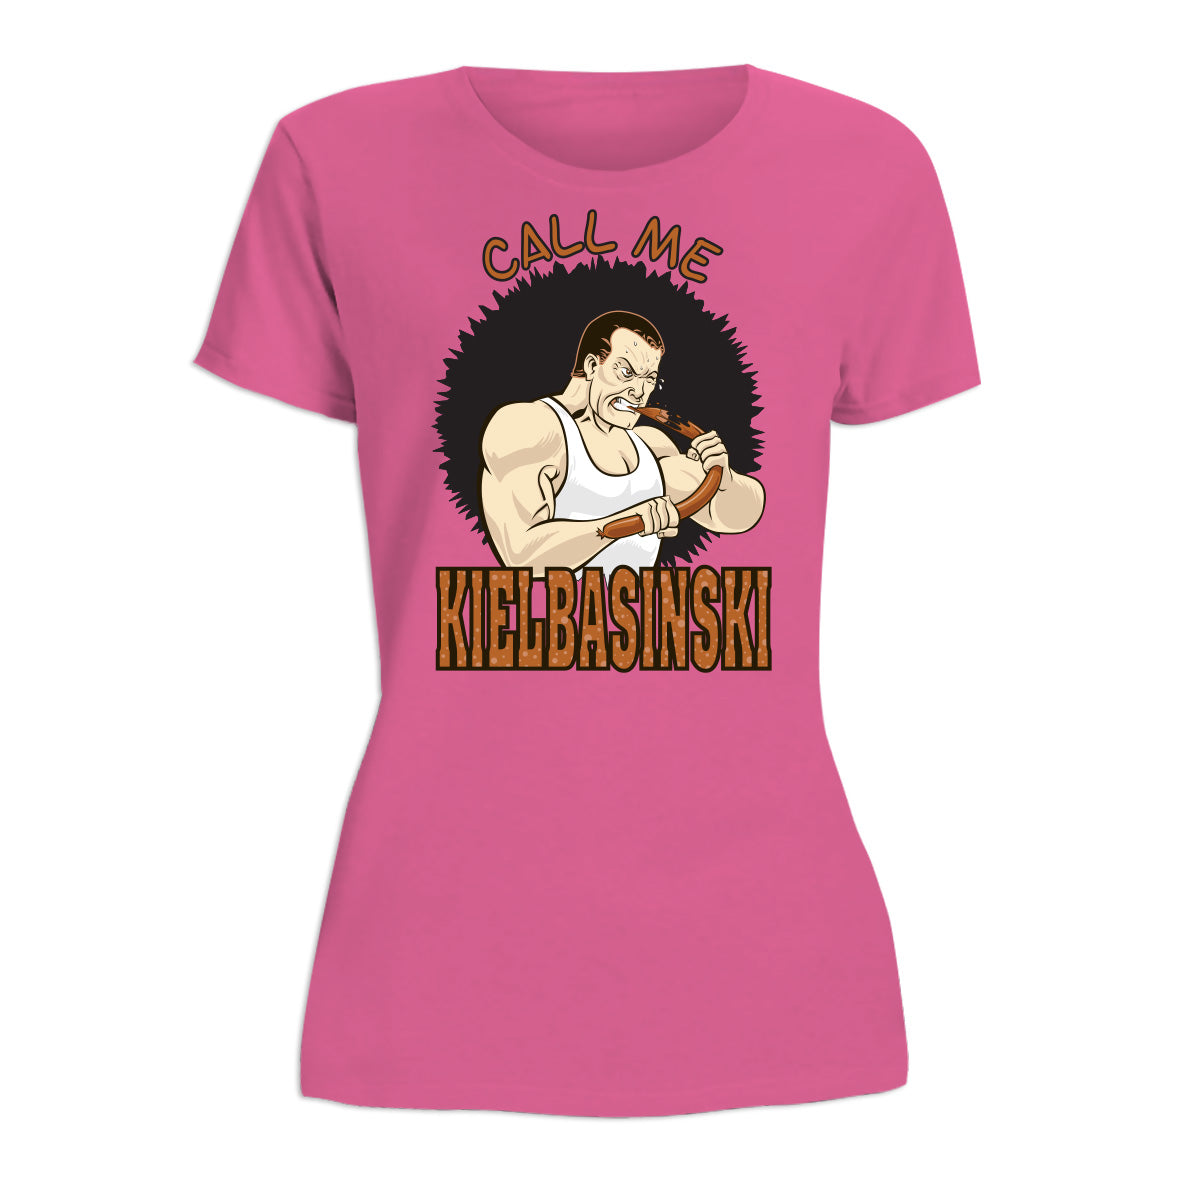 Call Me Kielbasinski Women's Short Sleeve Tshirt